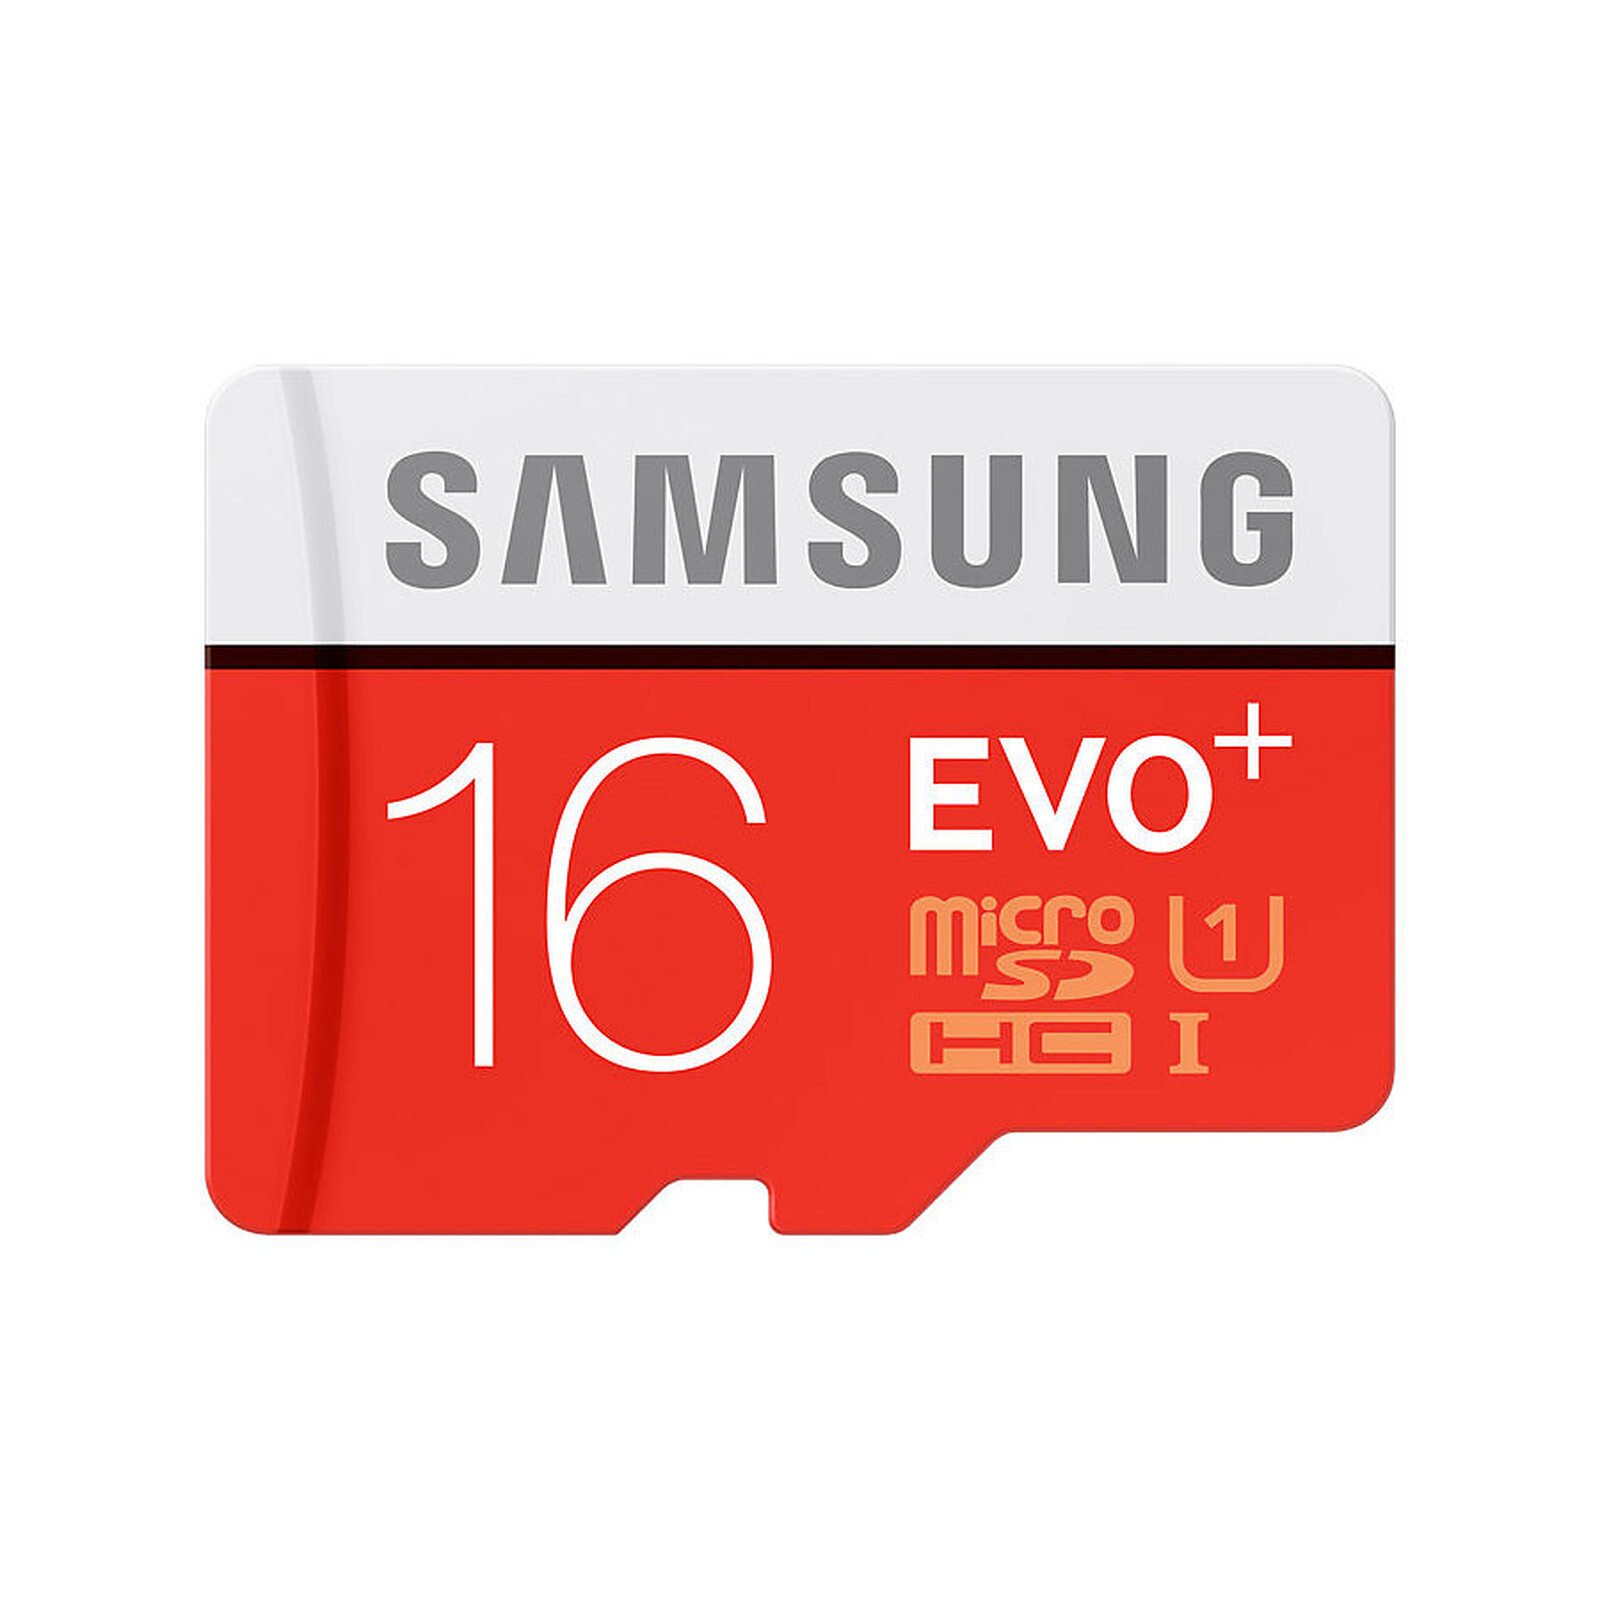 Samsung EVO Plus microSD 16 Go - Carte mémoire - Garantie 3 ans LDLC